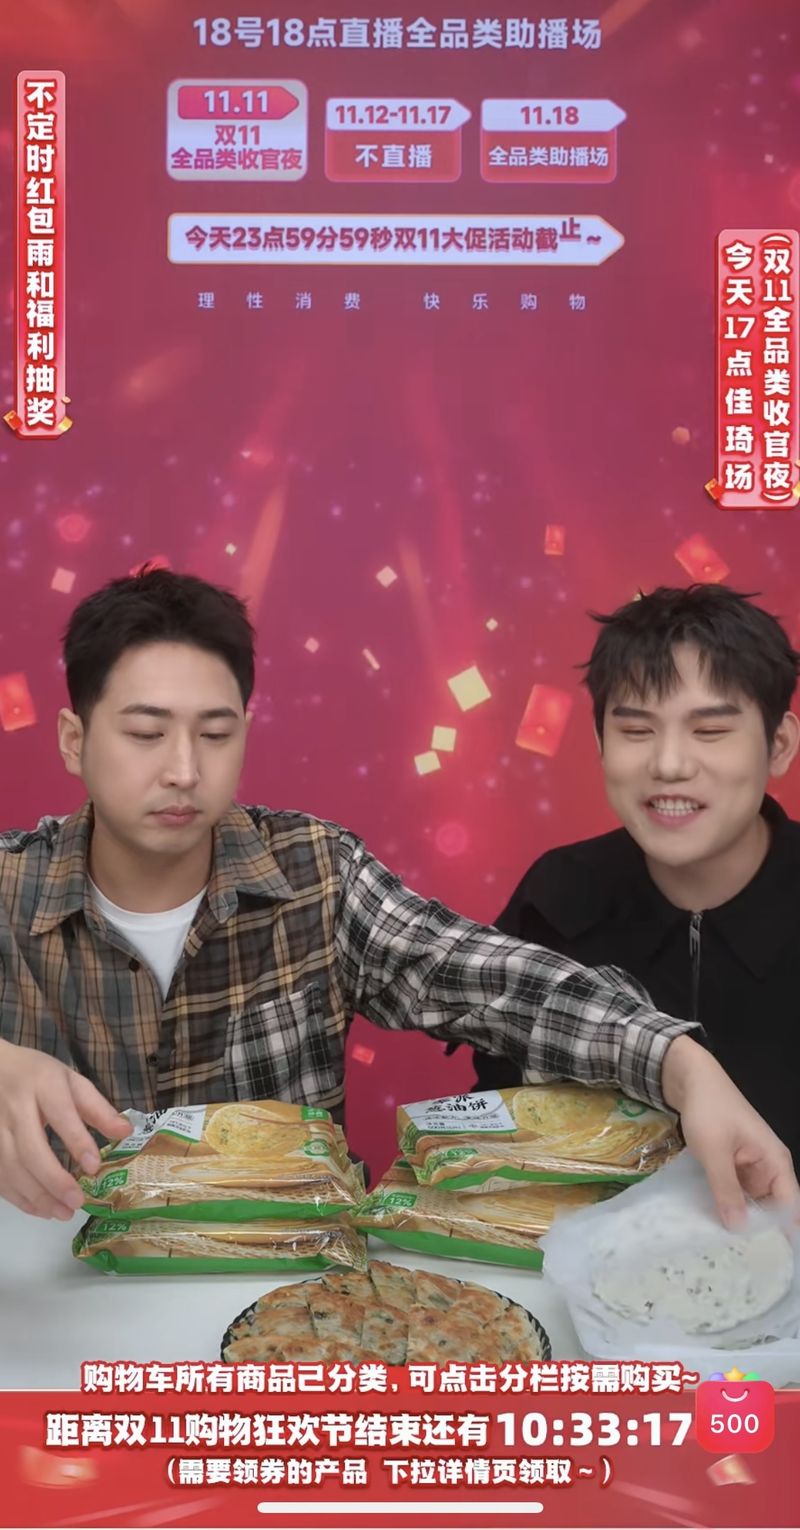 Two hosts from Li’s team showcasing onion bread, Lipstick King livestream on Singles Day